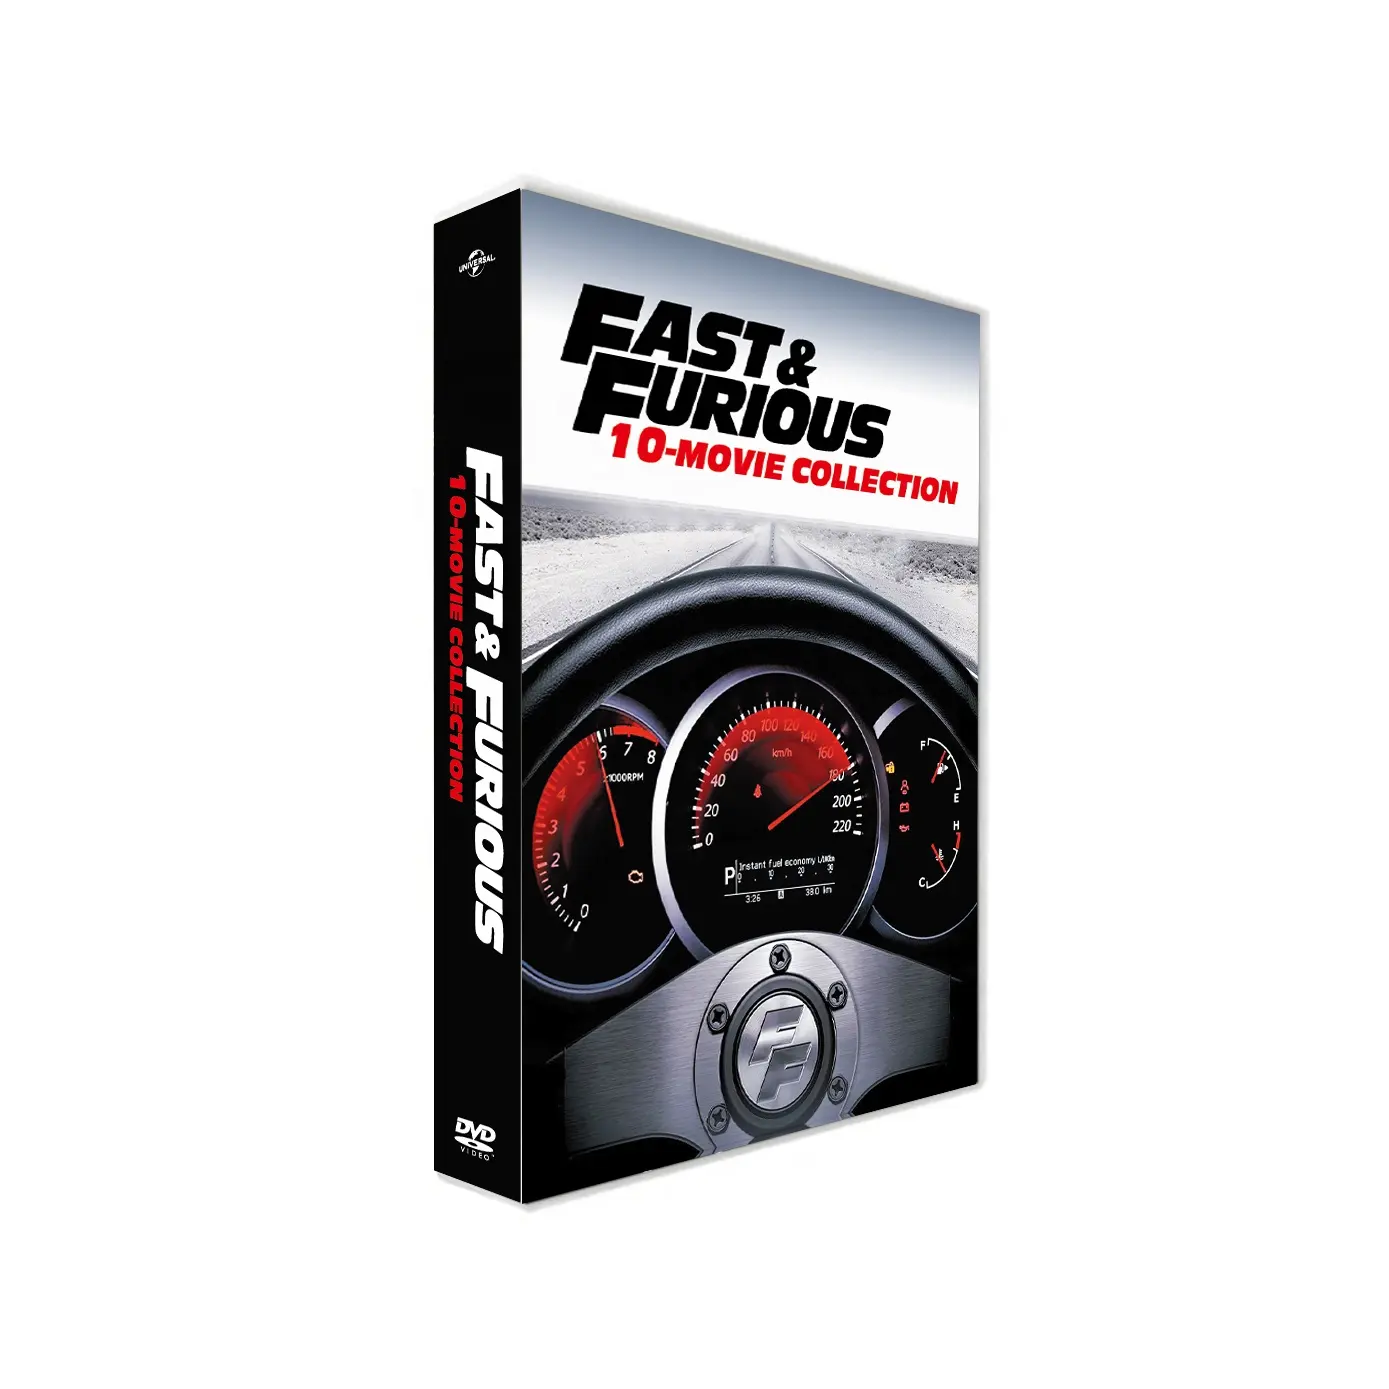 Fast & Furious DVD คอลเลกชันภาพยนตร์ 10 ภาพ 11 แผ่นซีดีชุด DVD ภาพยนตร์ Fast & Furious